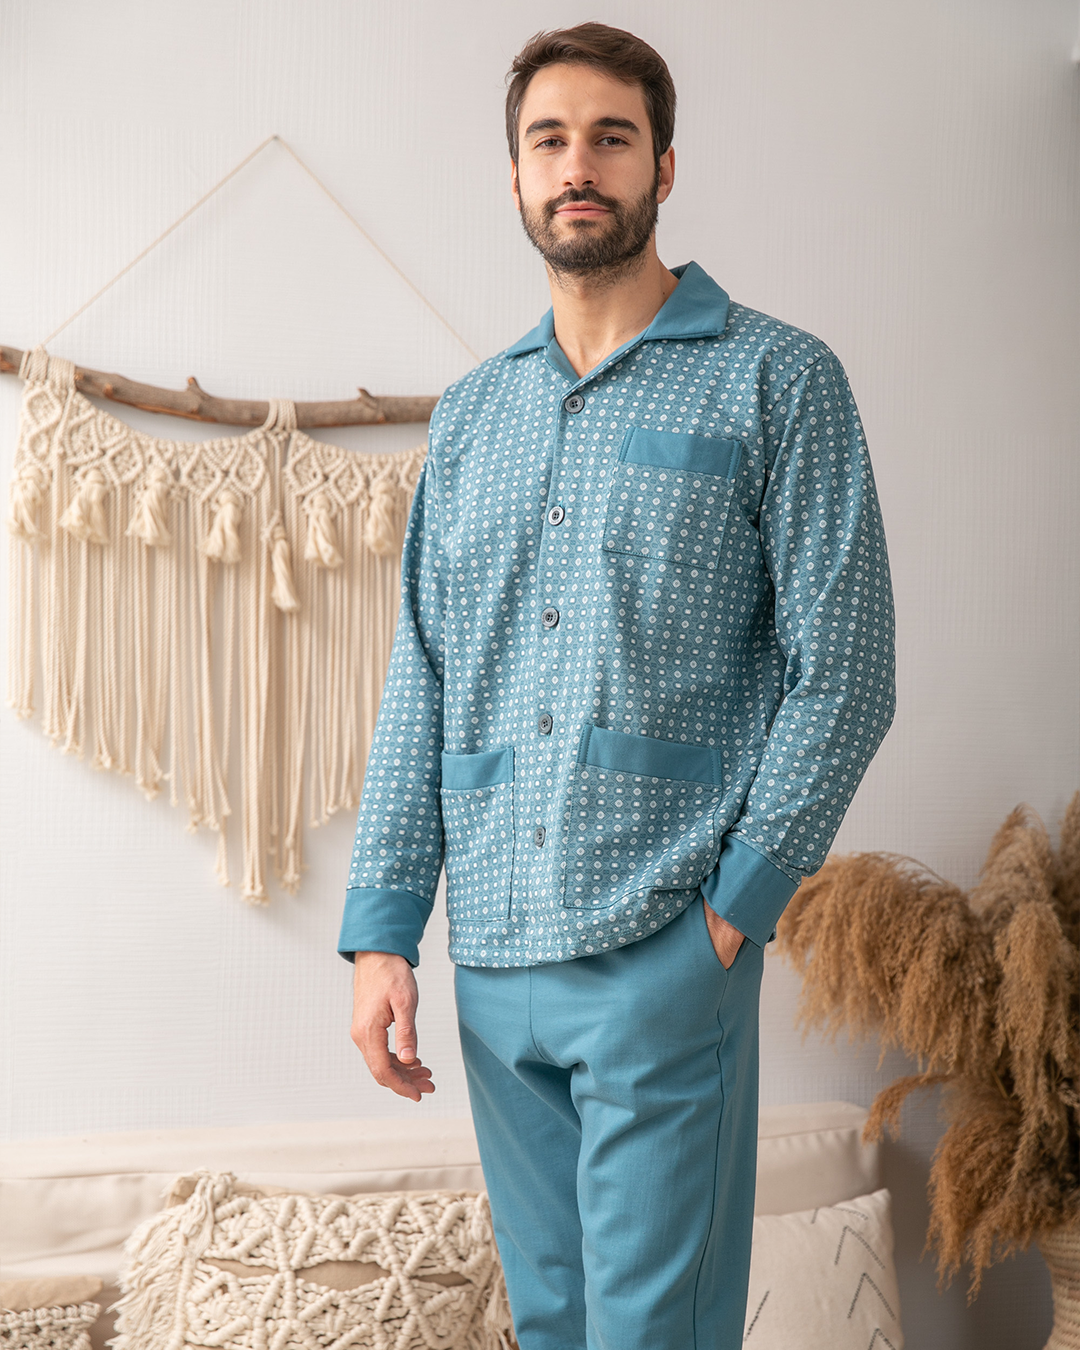 Men's pajamas, classic rotary shapes